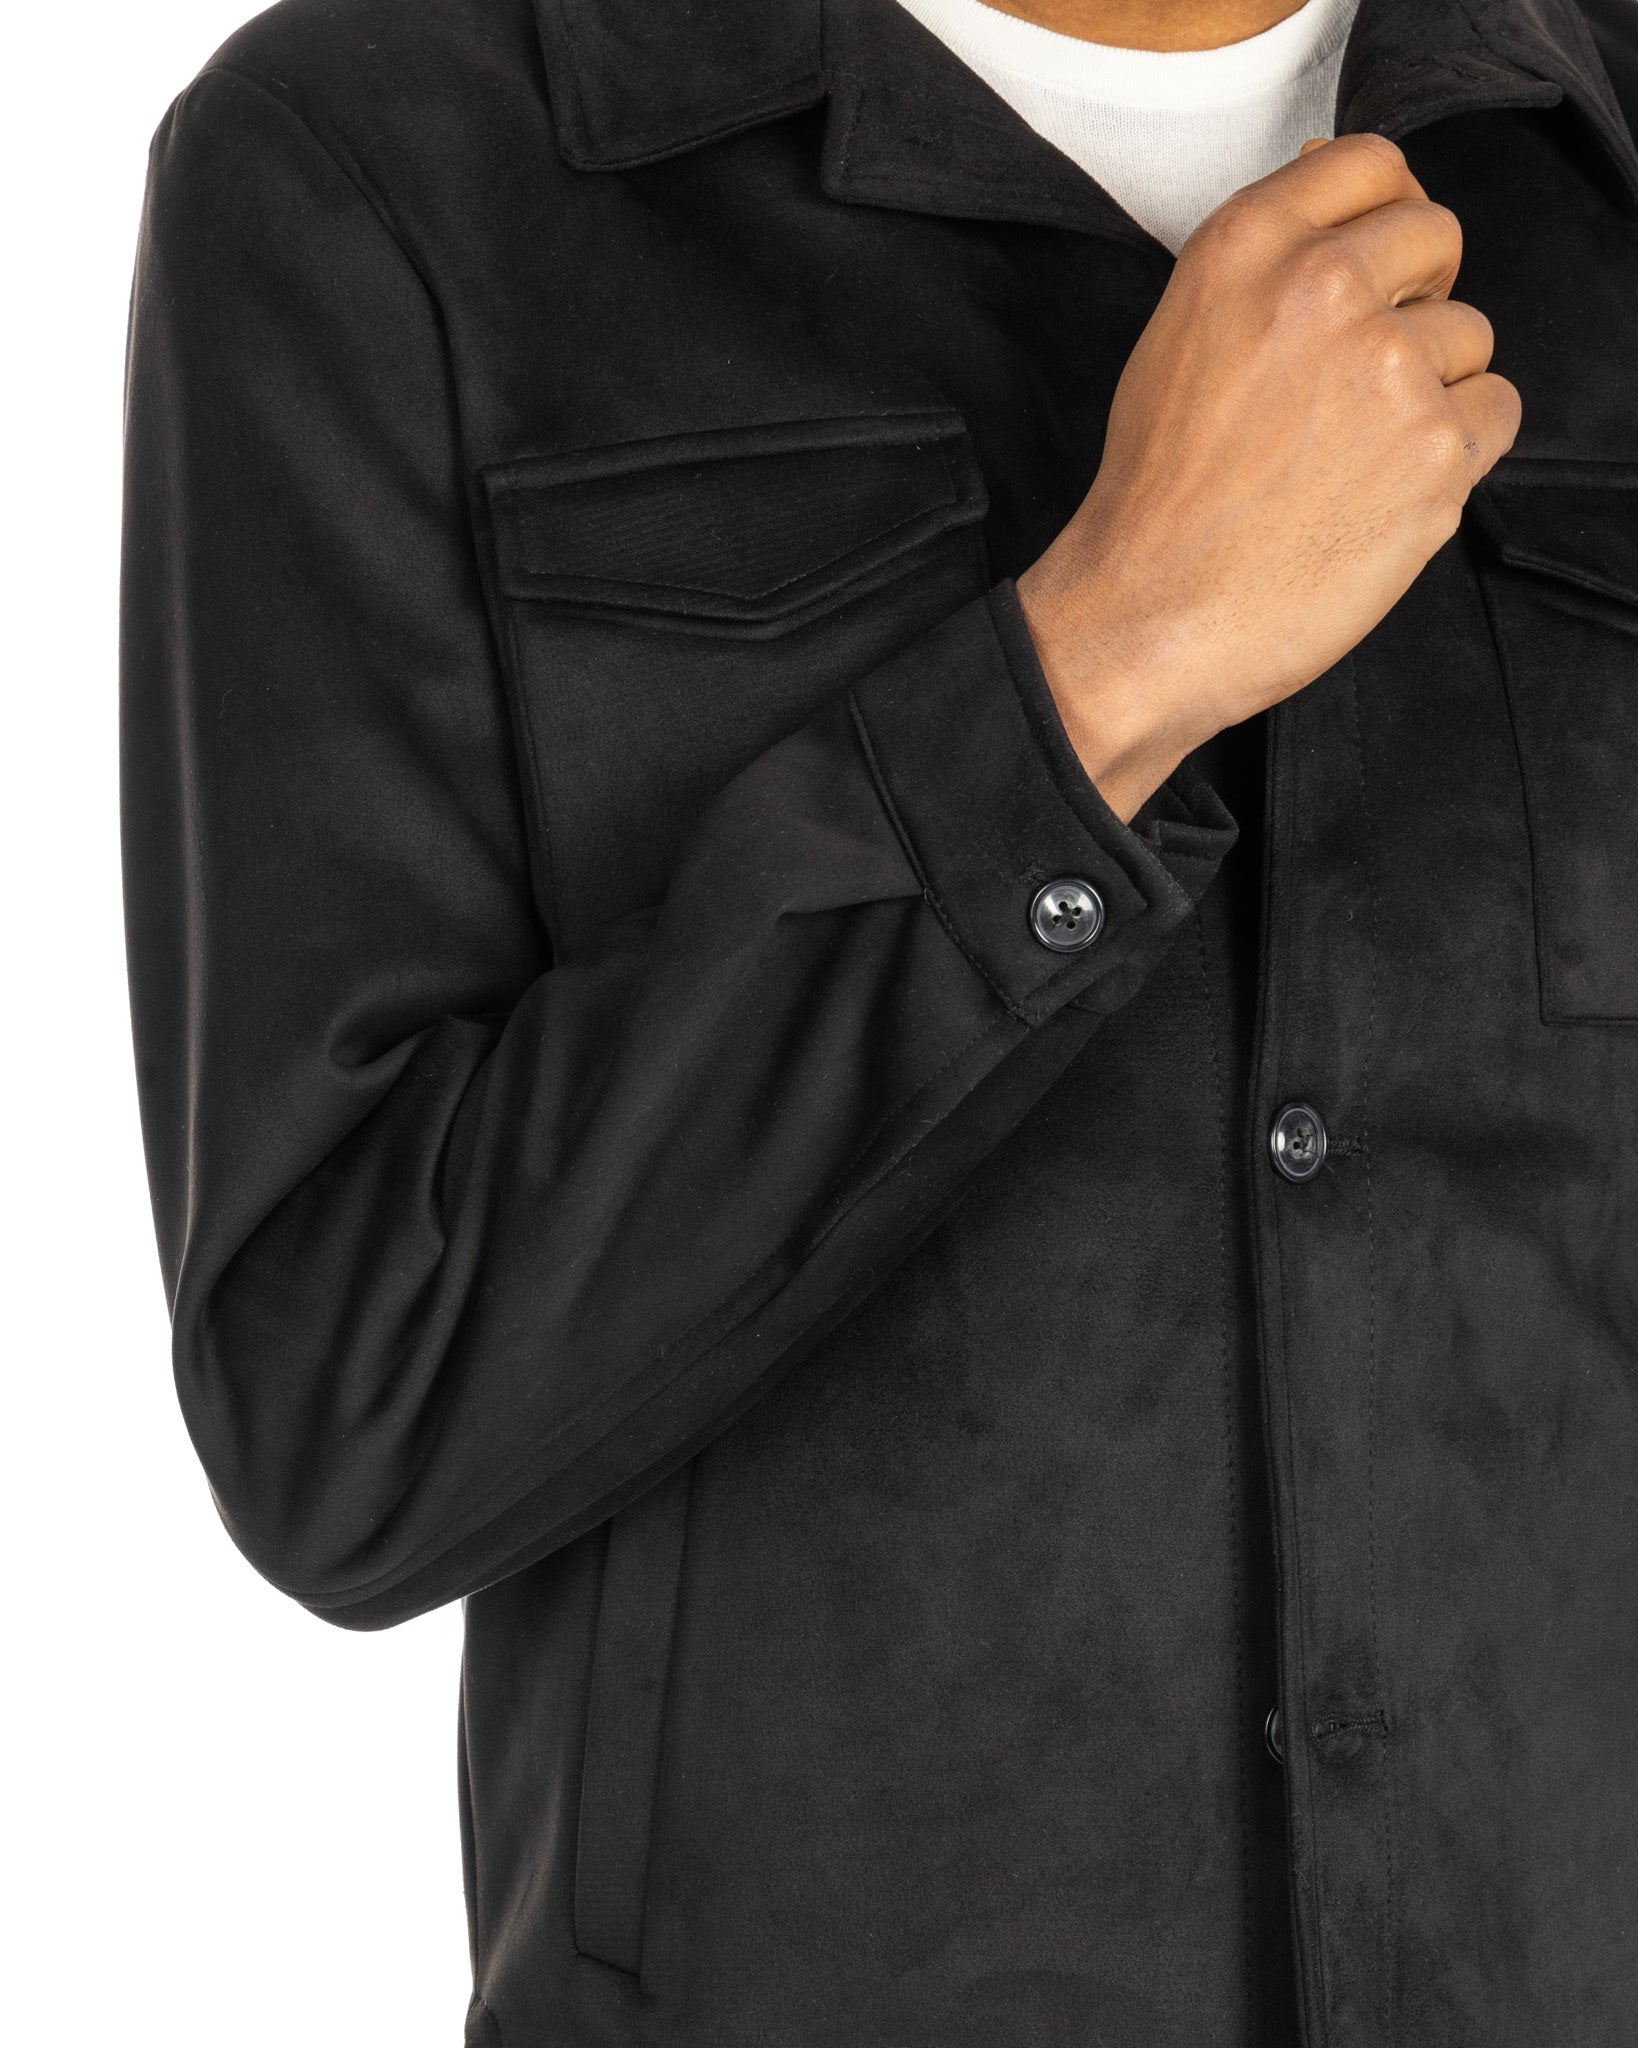 Meridion - veste en daim noir